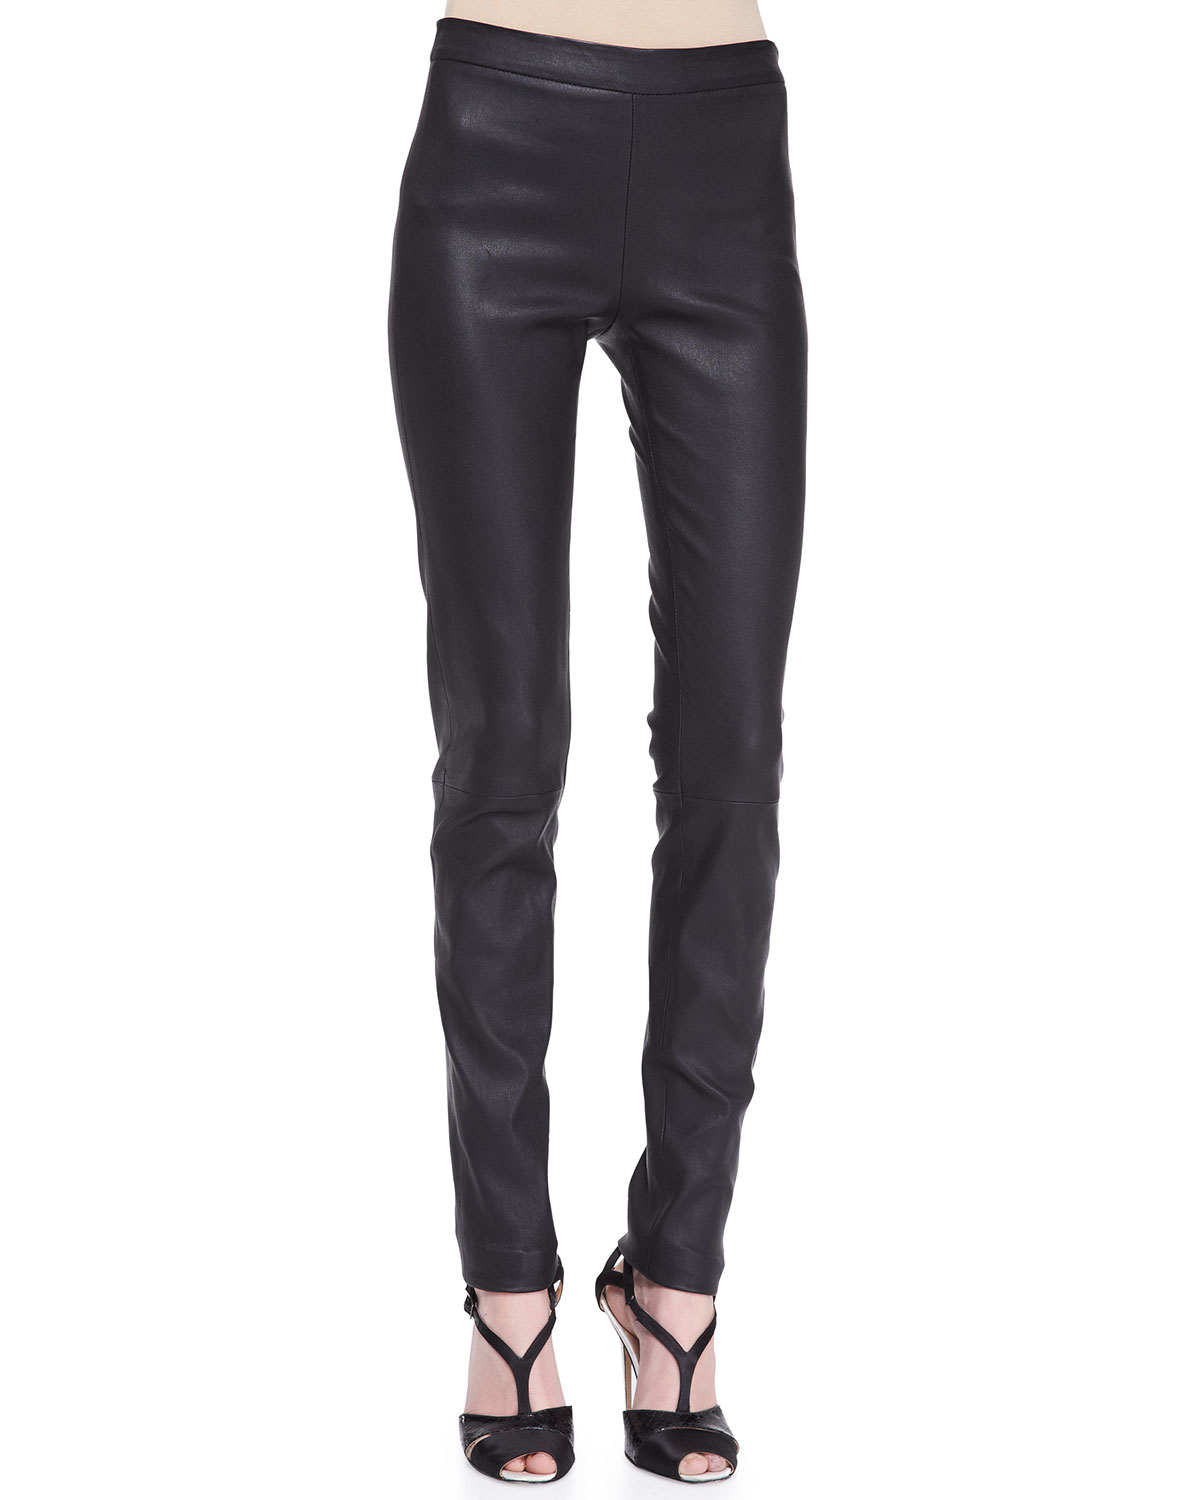 Lyst - Carolina Herrera Skinny Leather Pants in Black